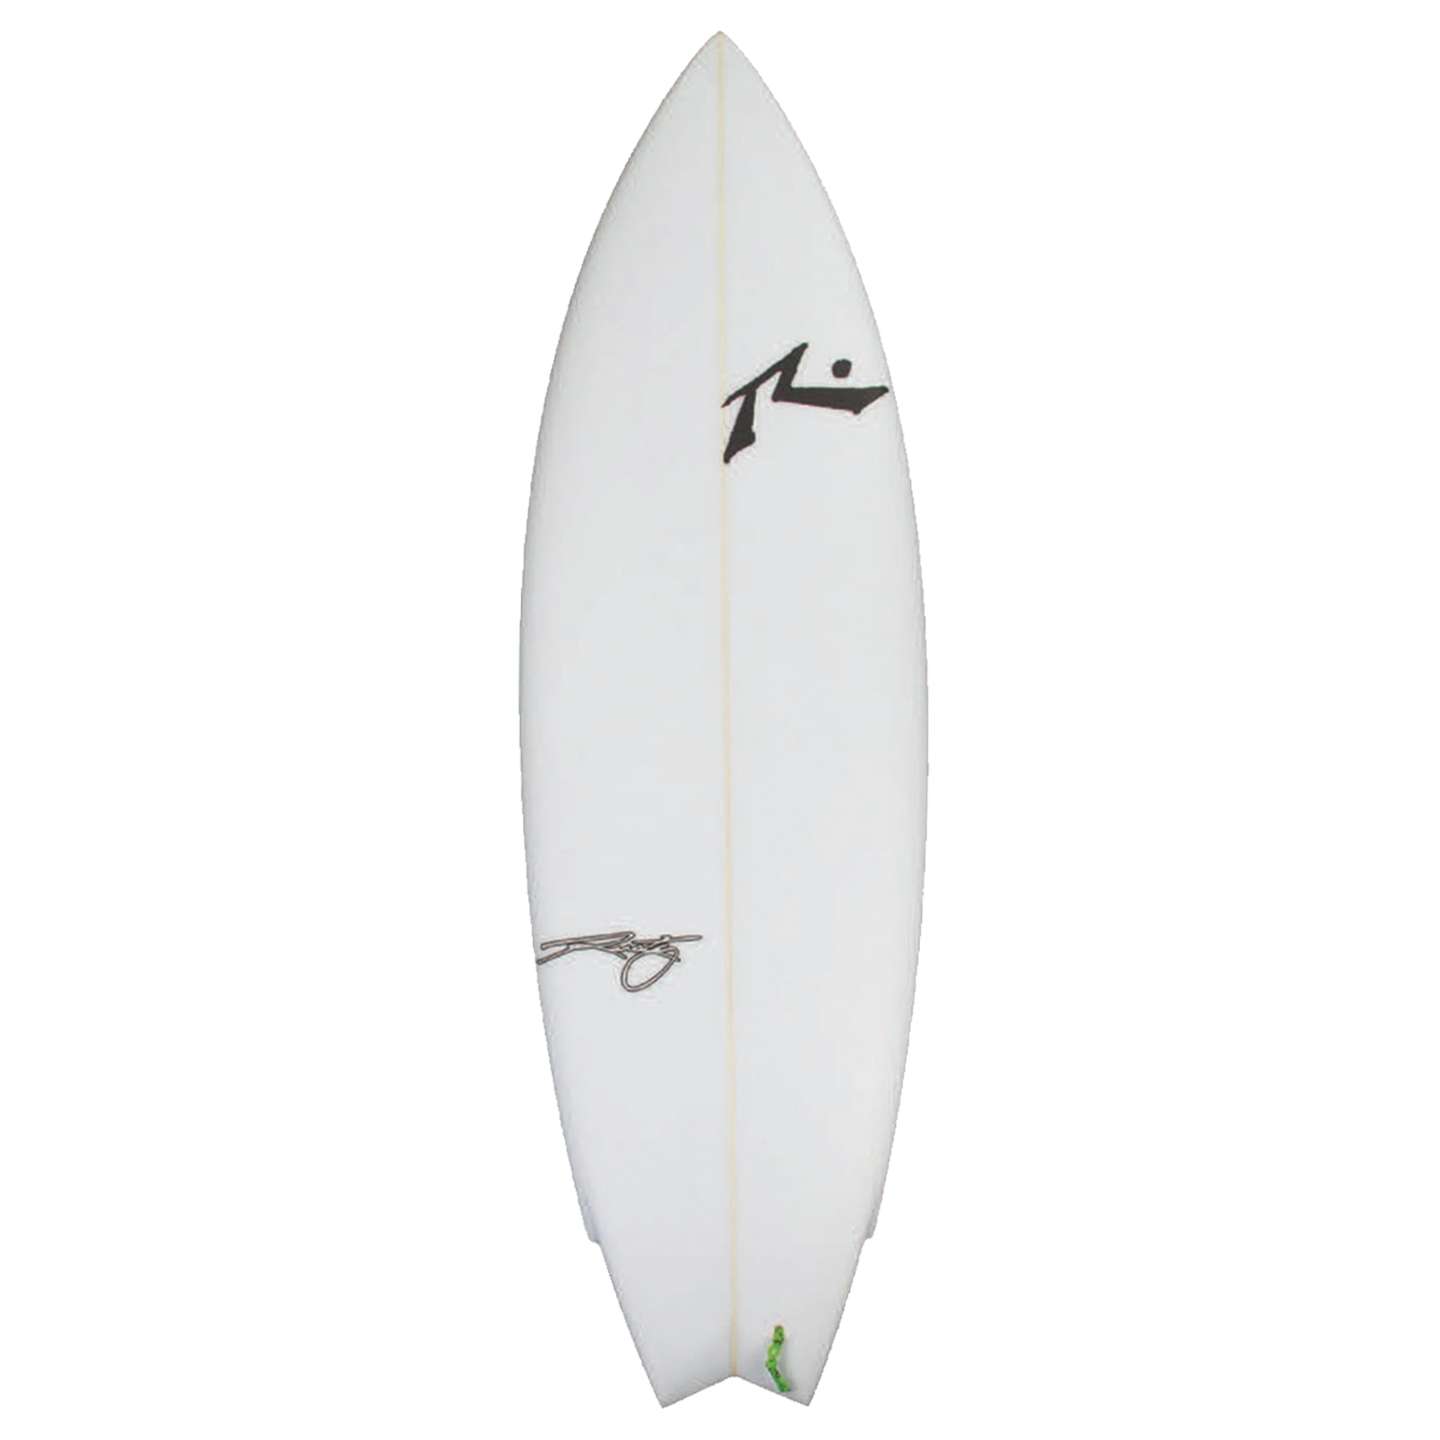 Rusty Hustler Surfboard 2014